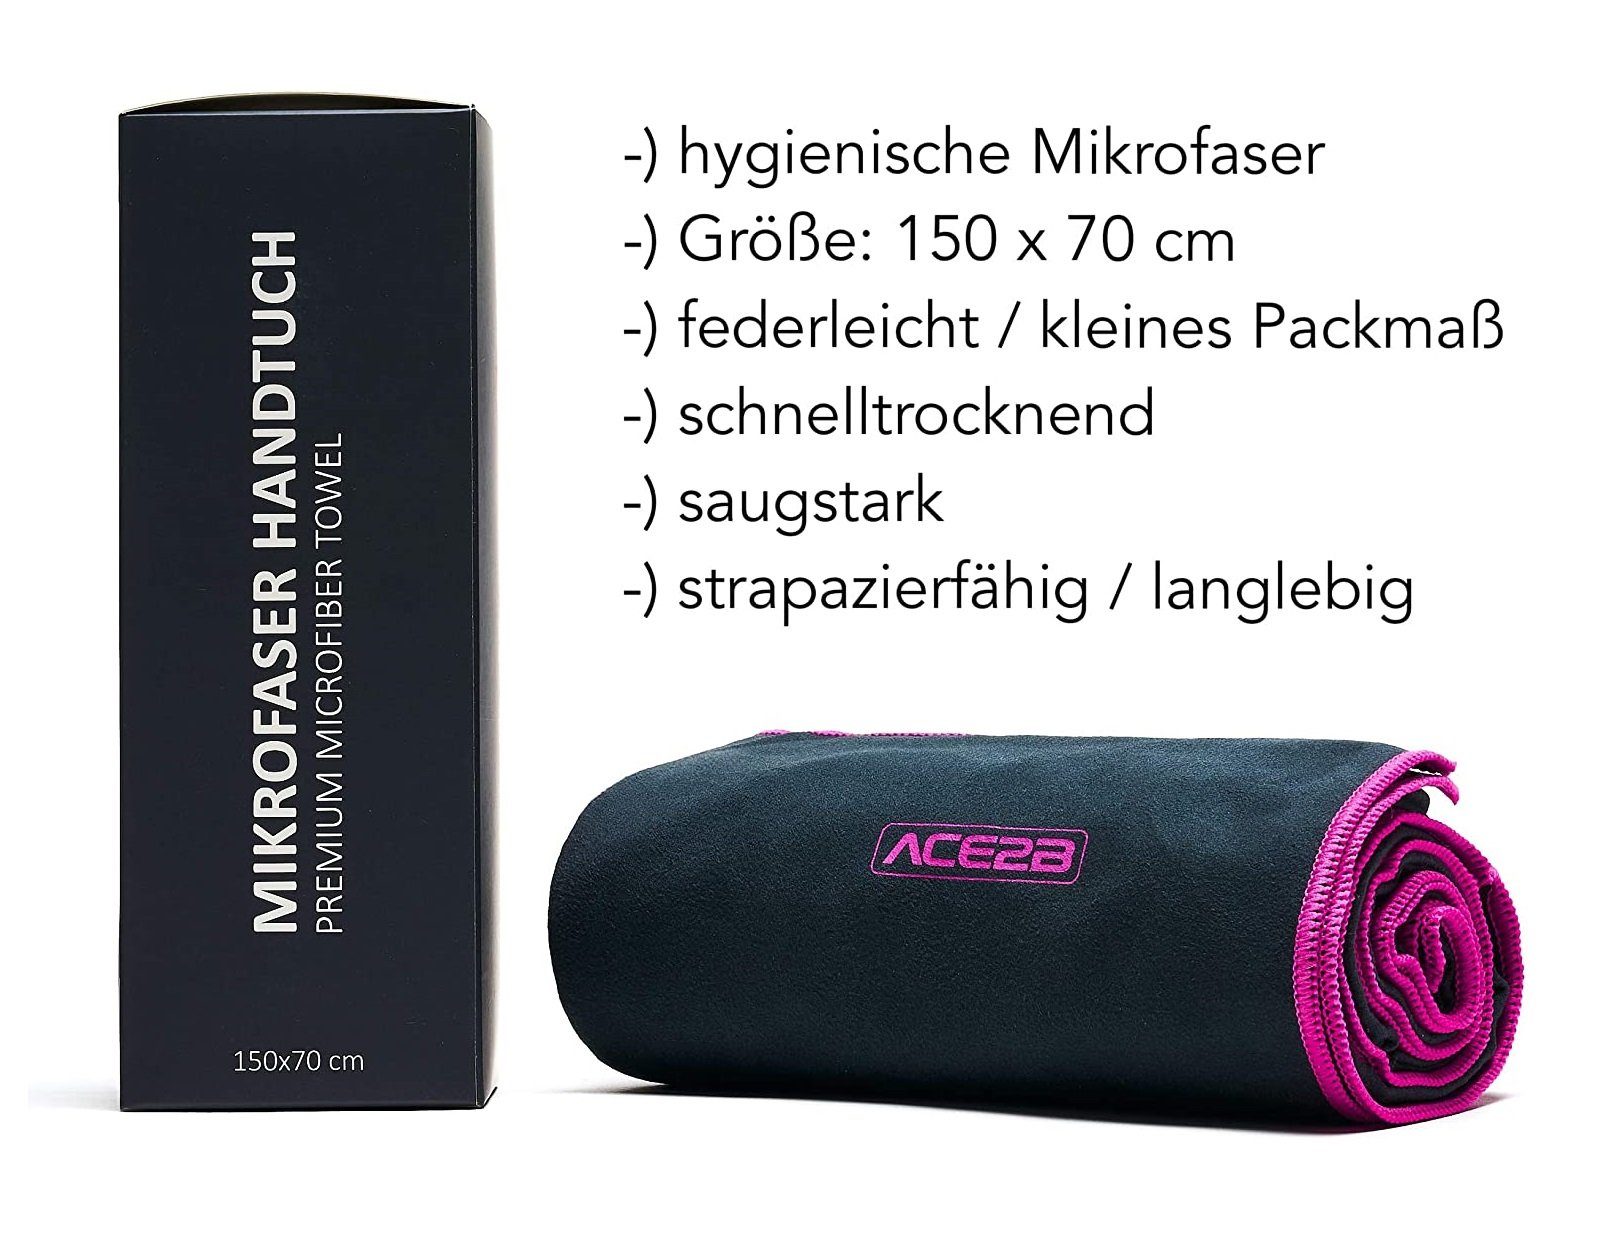 ACE2B Sporthandtuch ace2b Fitness Handtuch Mikrofaser schnelltrocknend 150cm x 70cm Pink